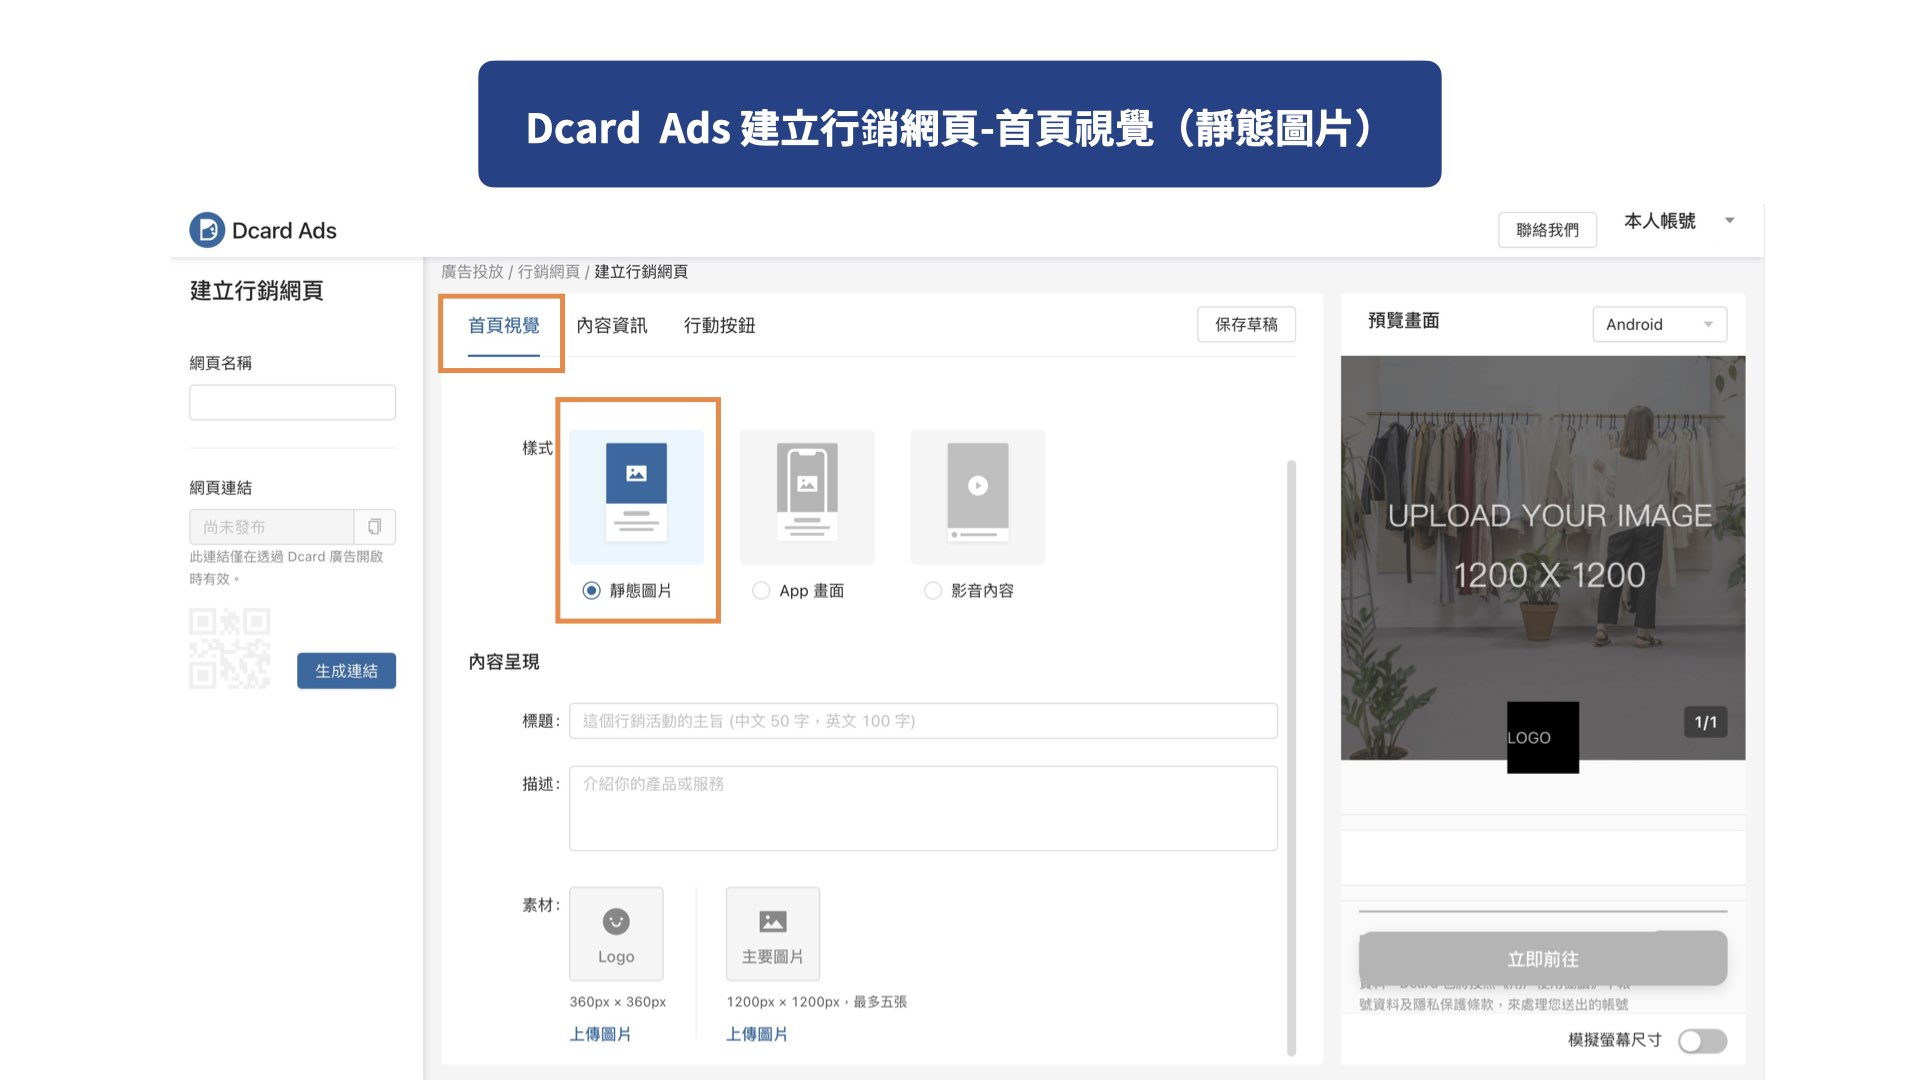 Dcard Ads 建立行銷網頁-首頁視覺（靜態圖片）